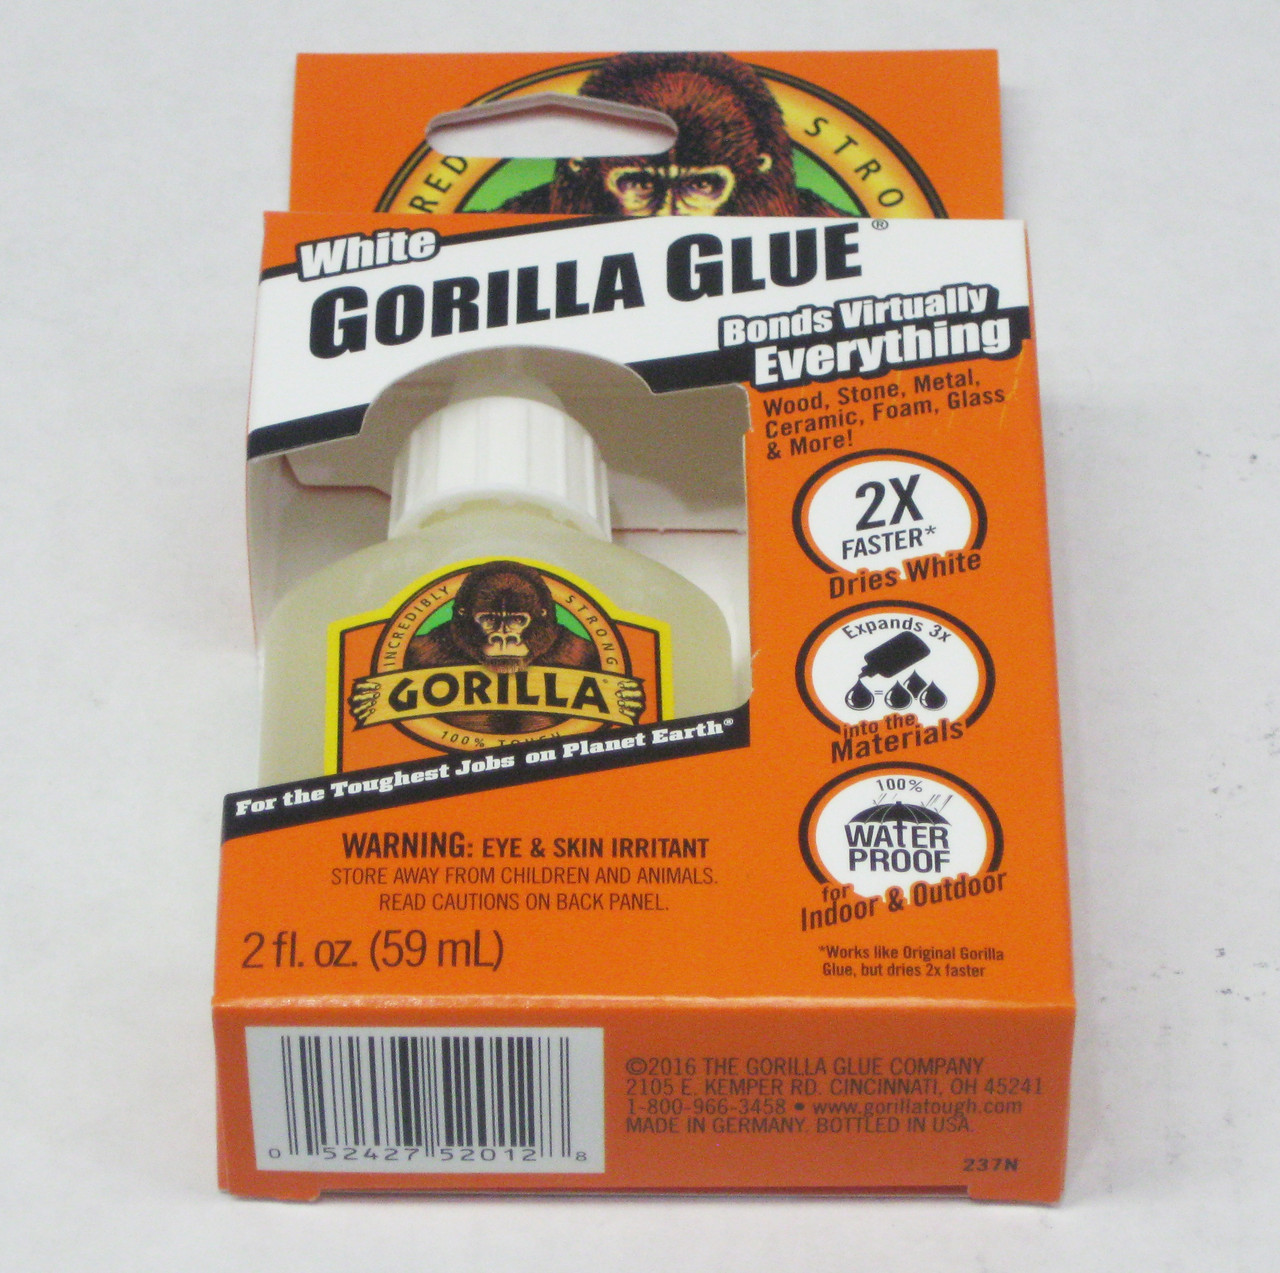 Gorilla Glue White 2 oz Strong Bonds Wood Stone Metal Glass